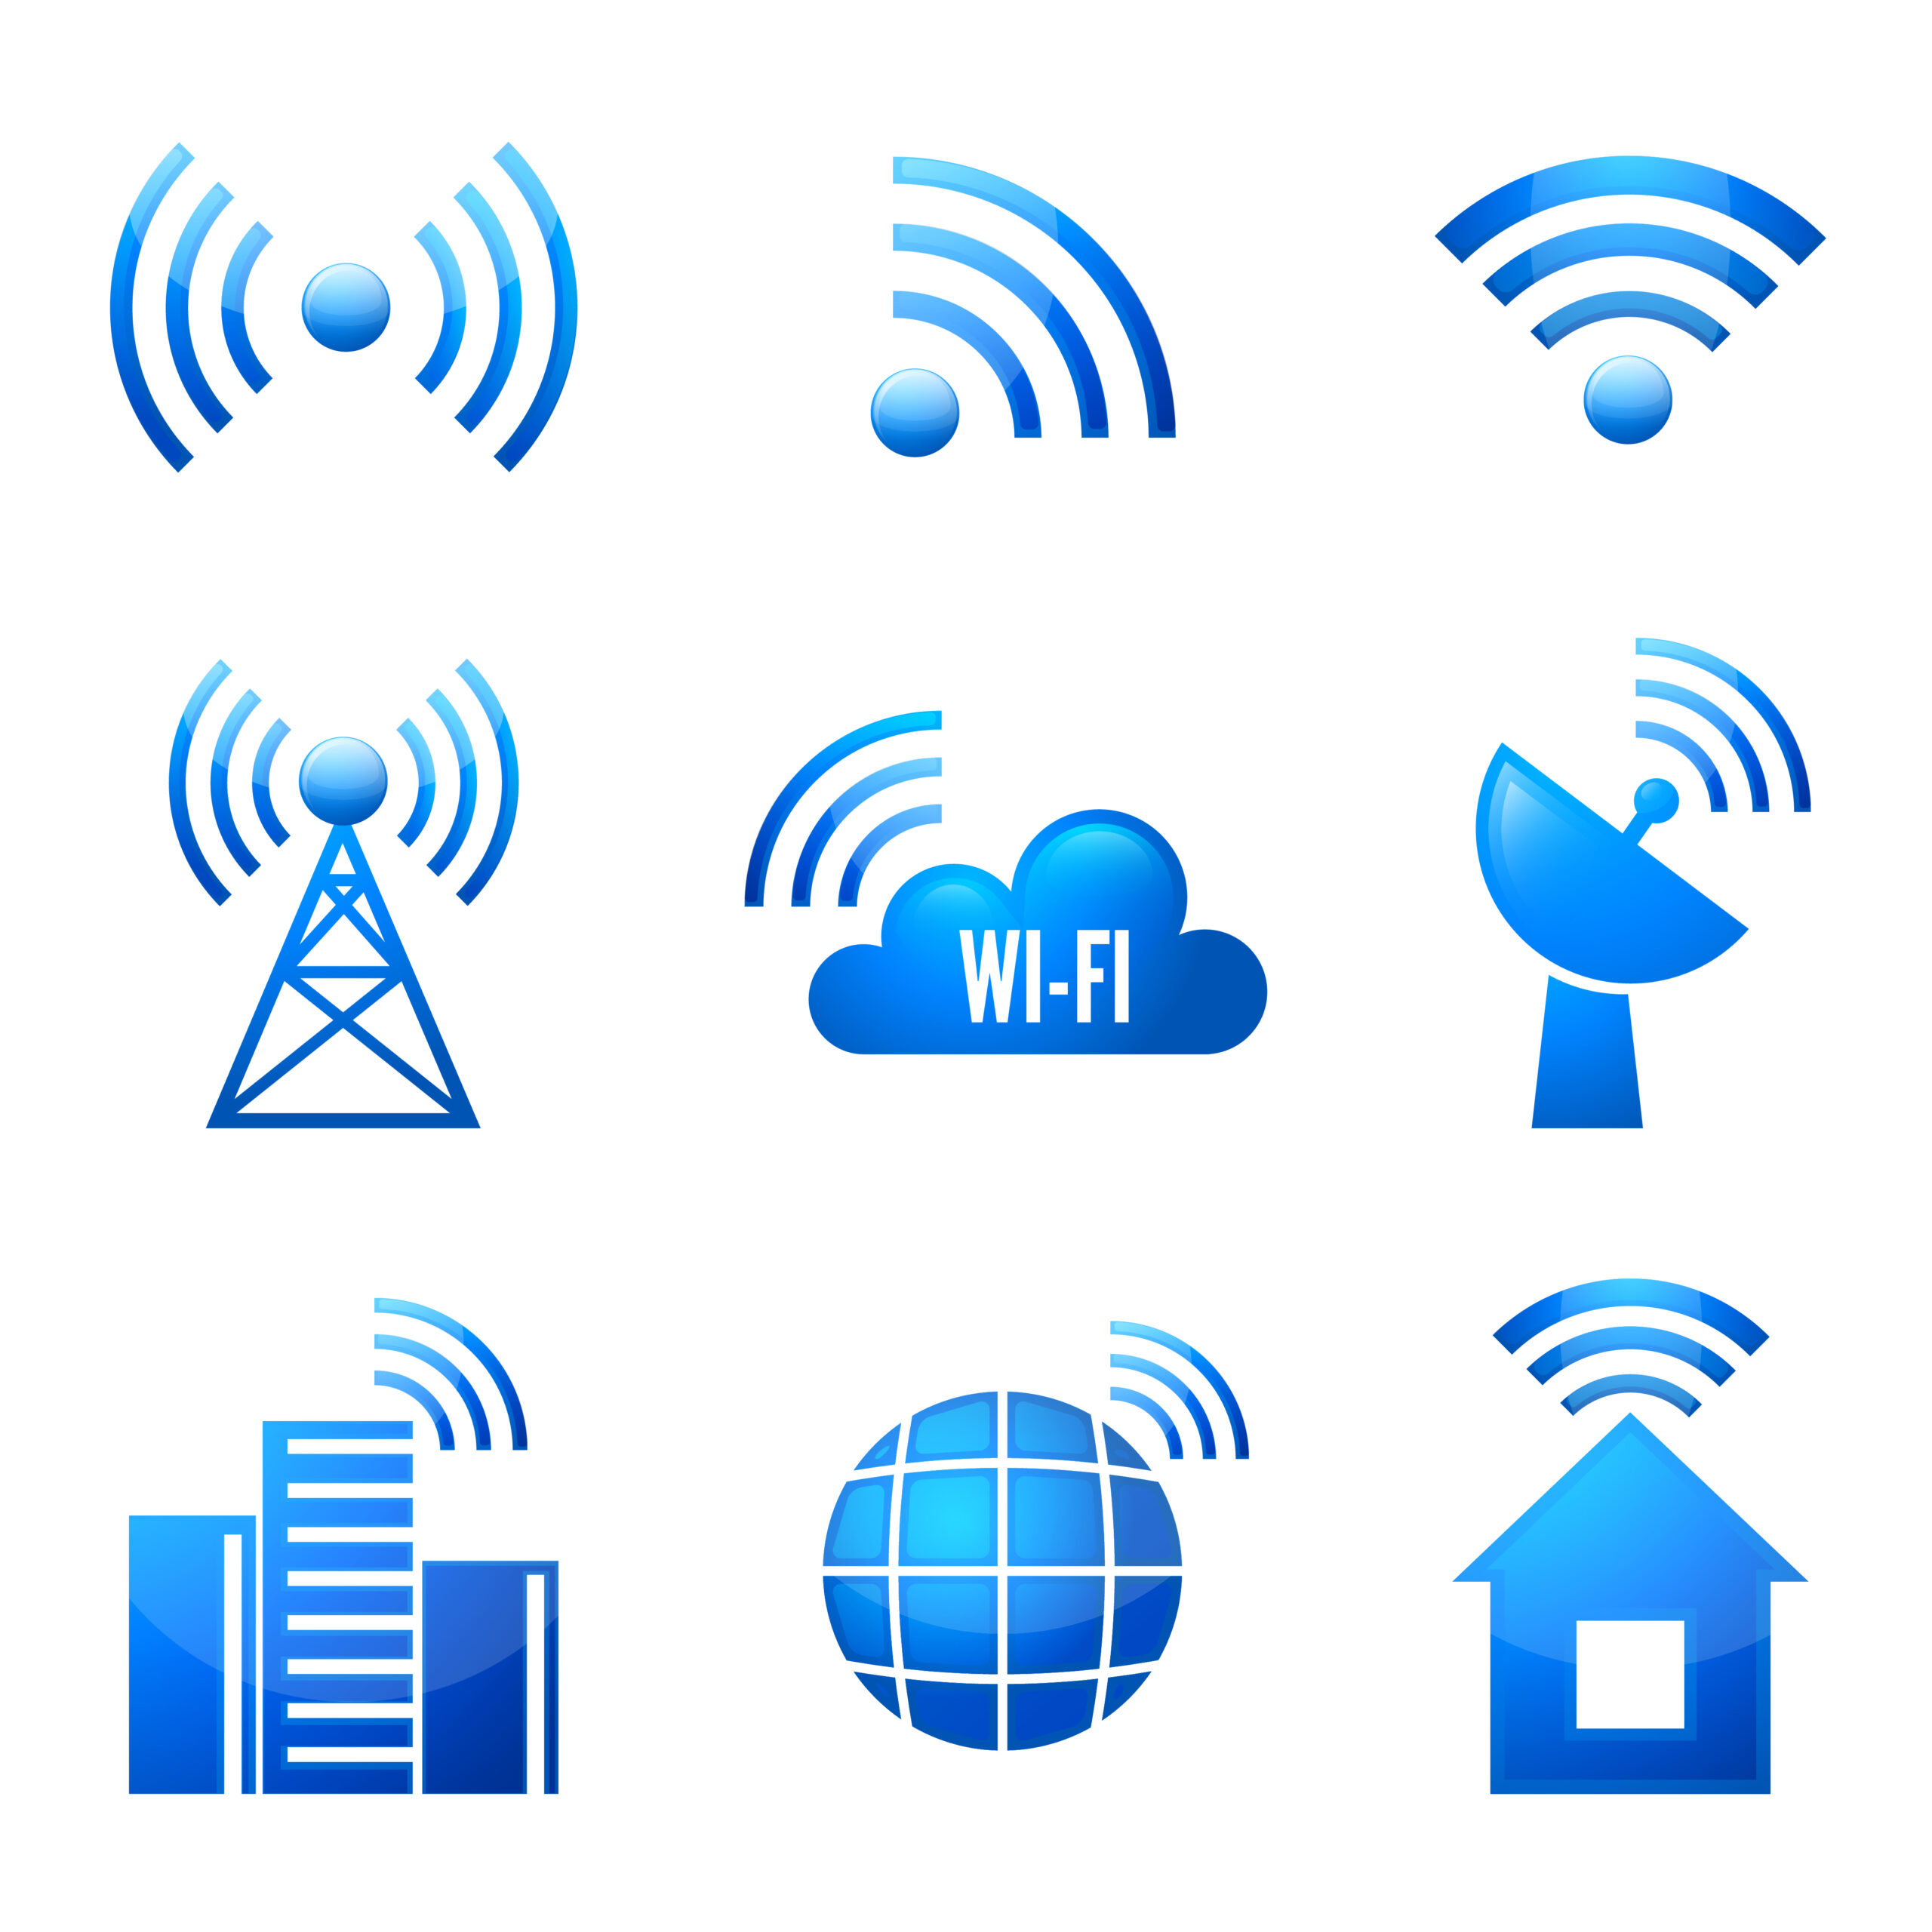 Public, Wi-fi networks